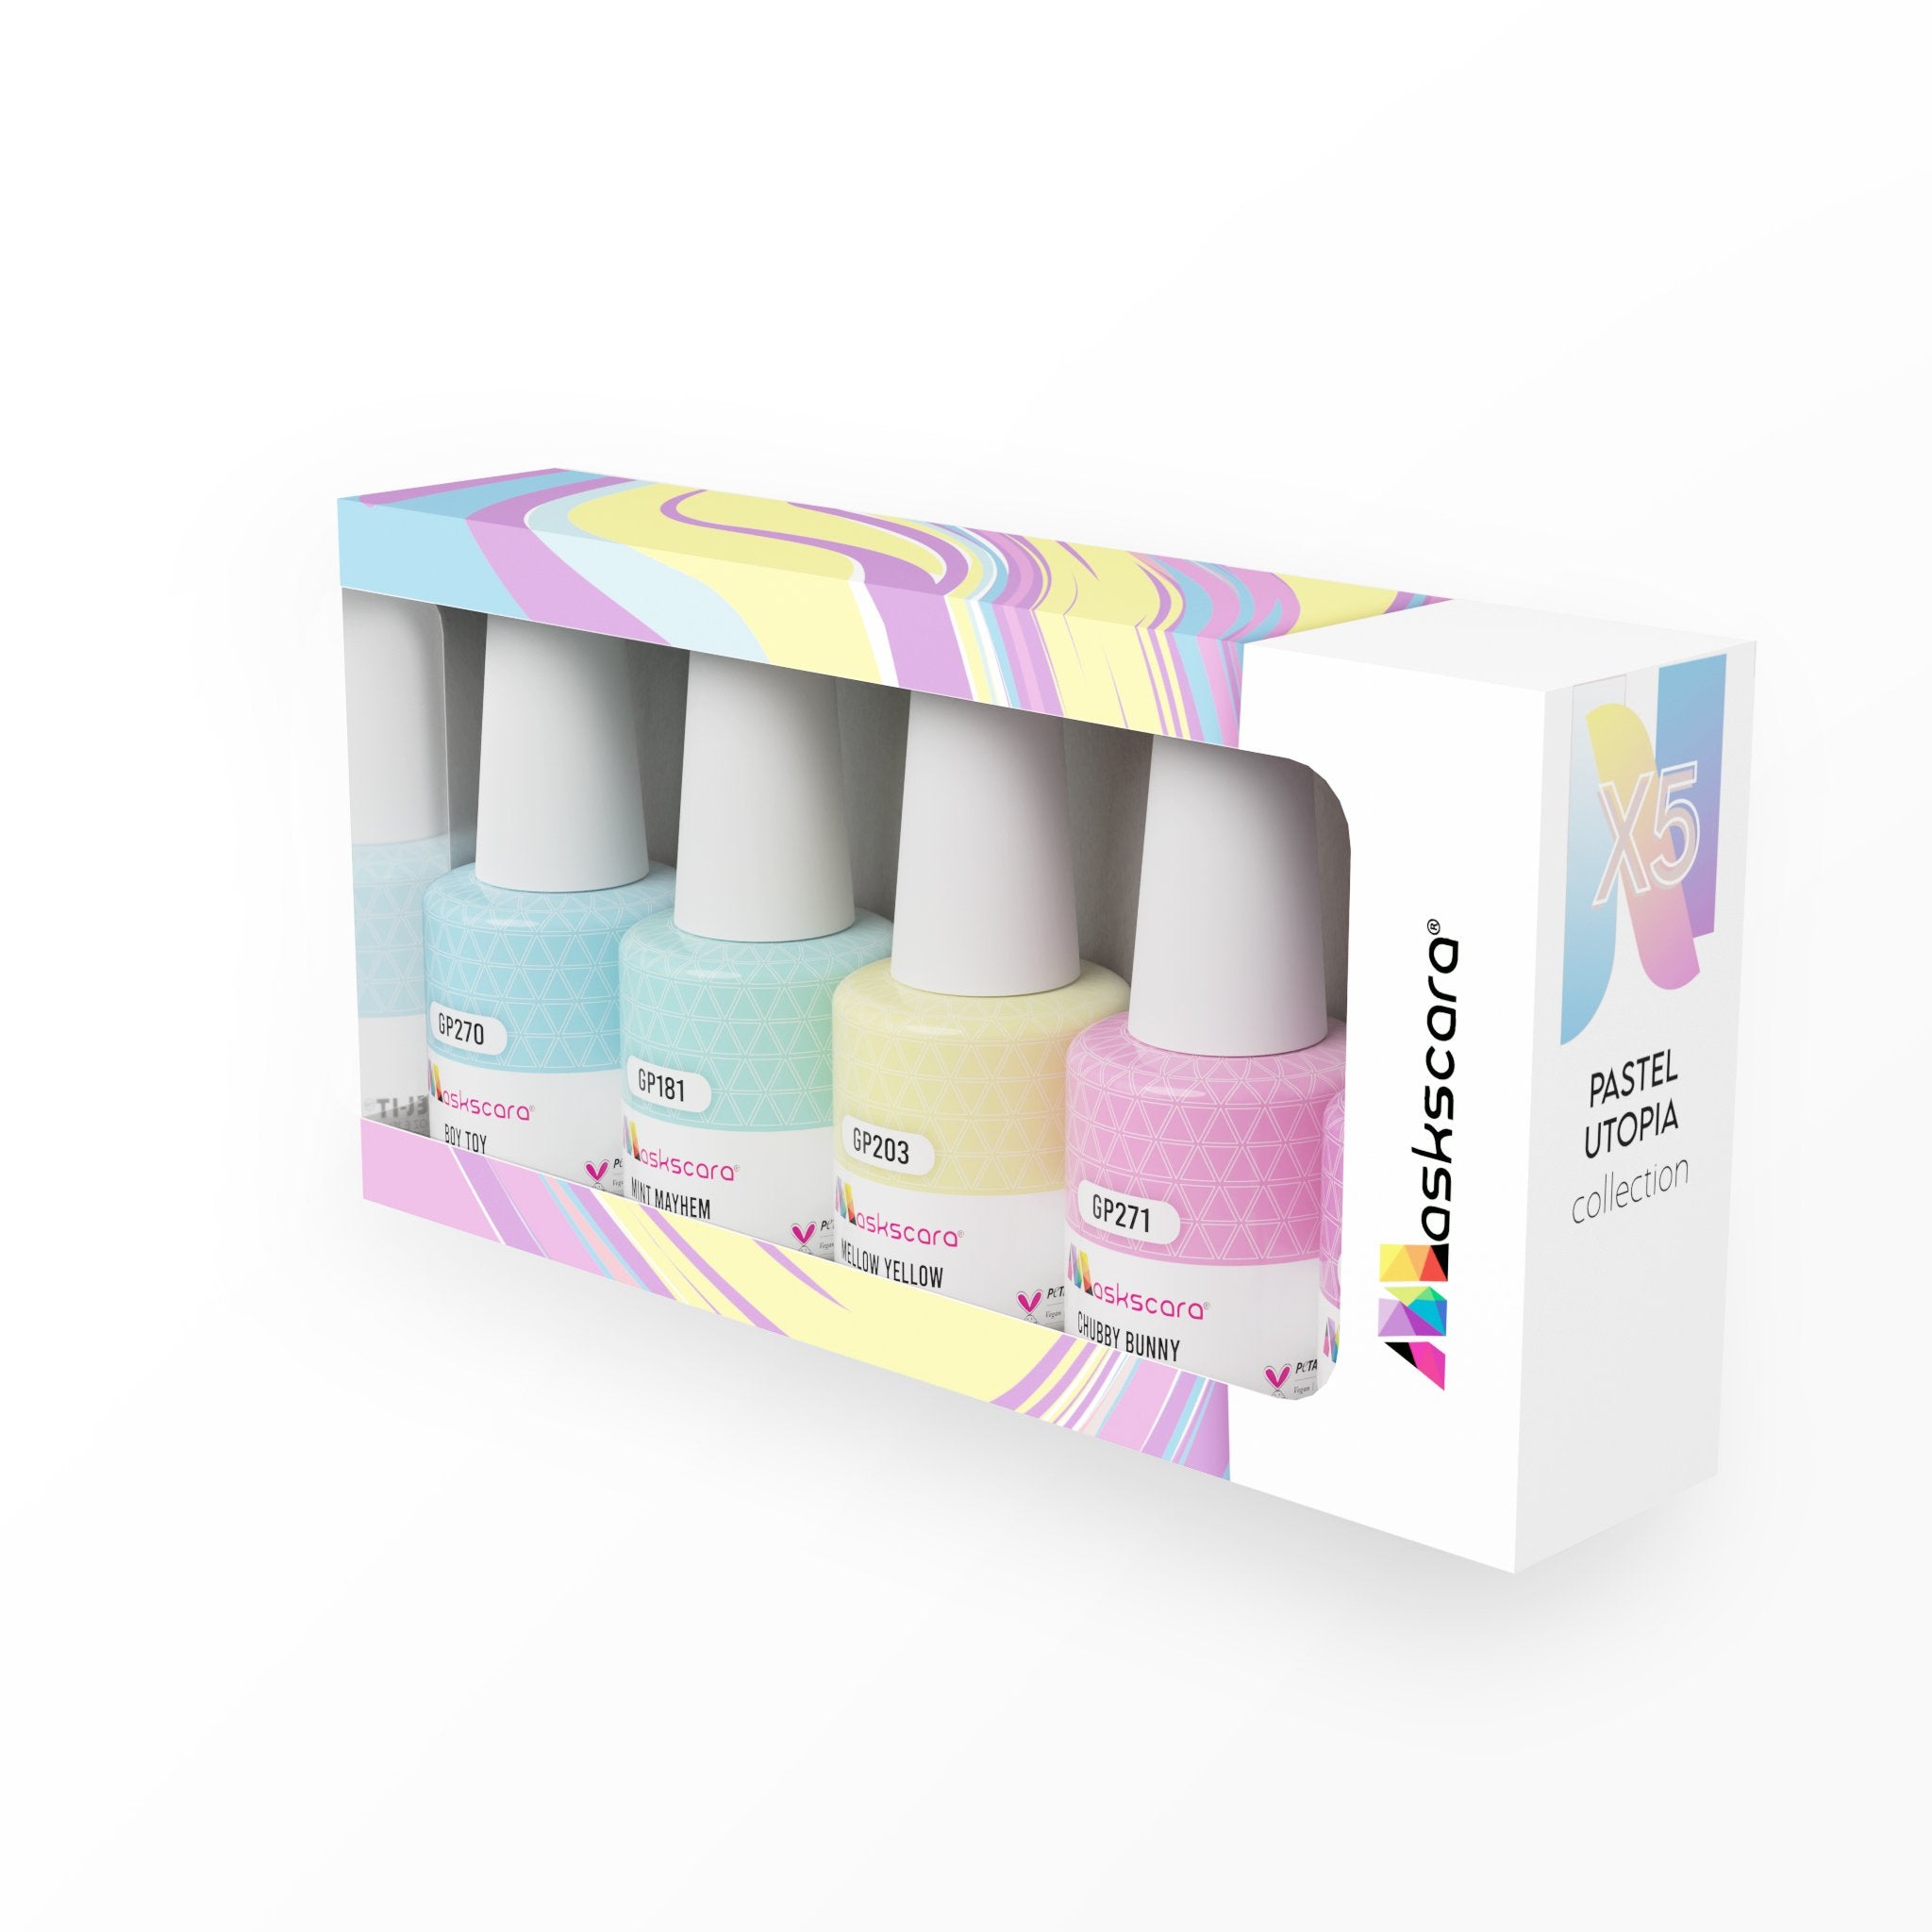 <img scr = “Maskscara Gel-It 5 Pack Pastel Utopia Kit.jpg” alt = “Pastel Gel Polish Kit by the brand Maskscara ”>